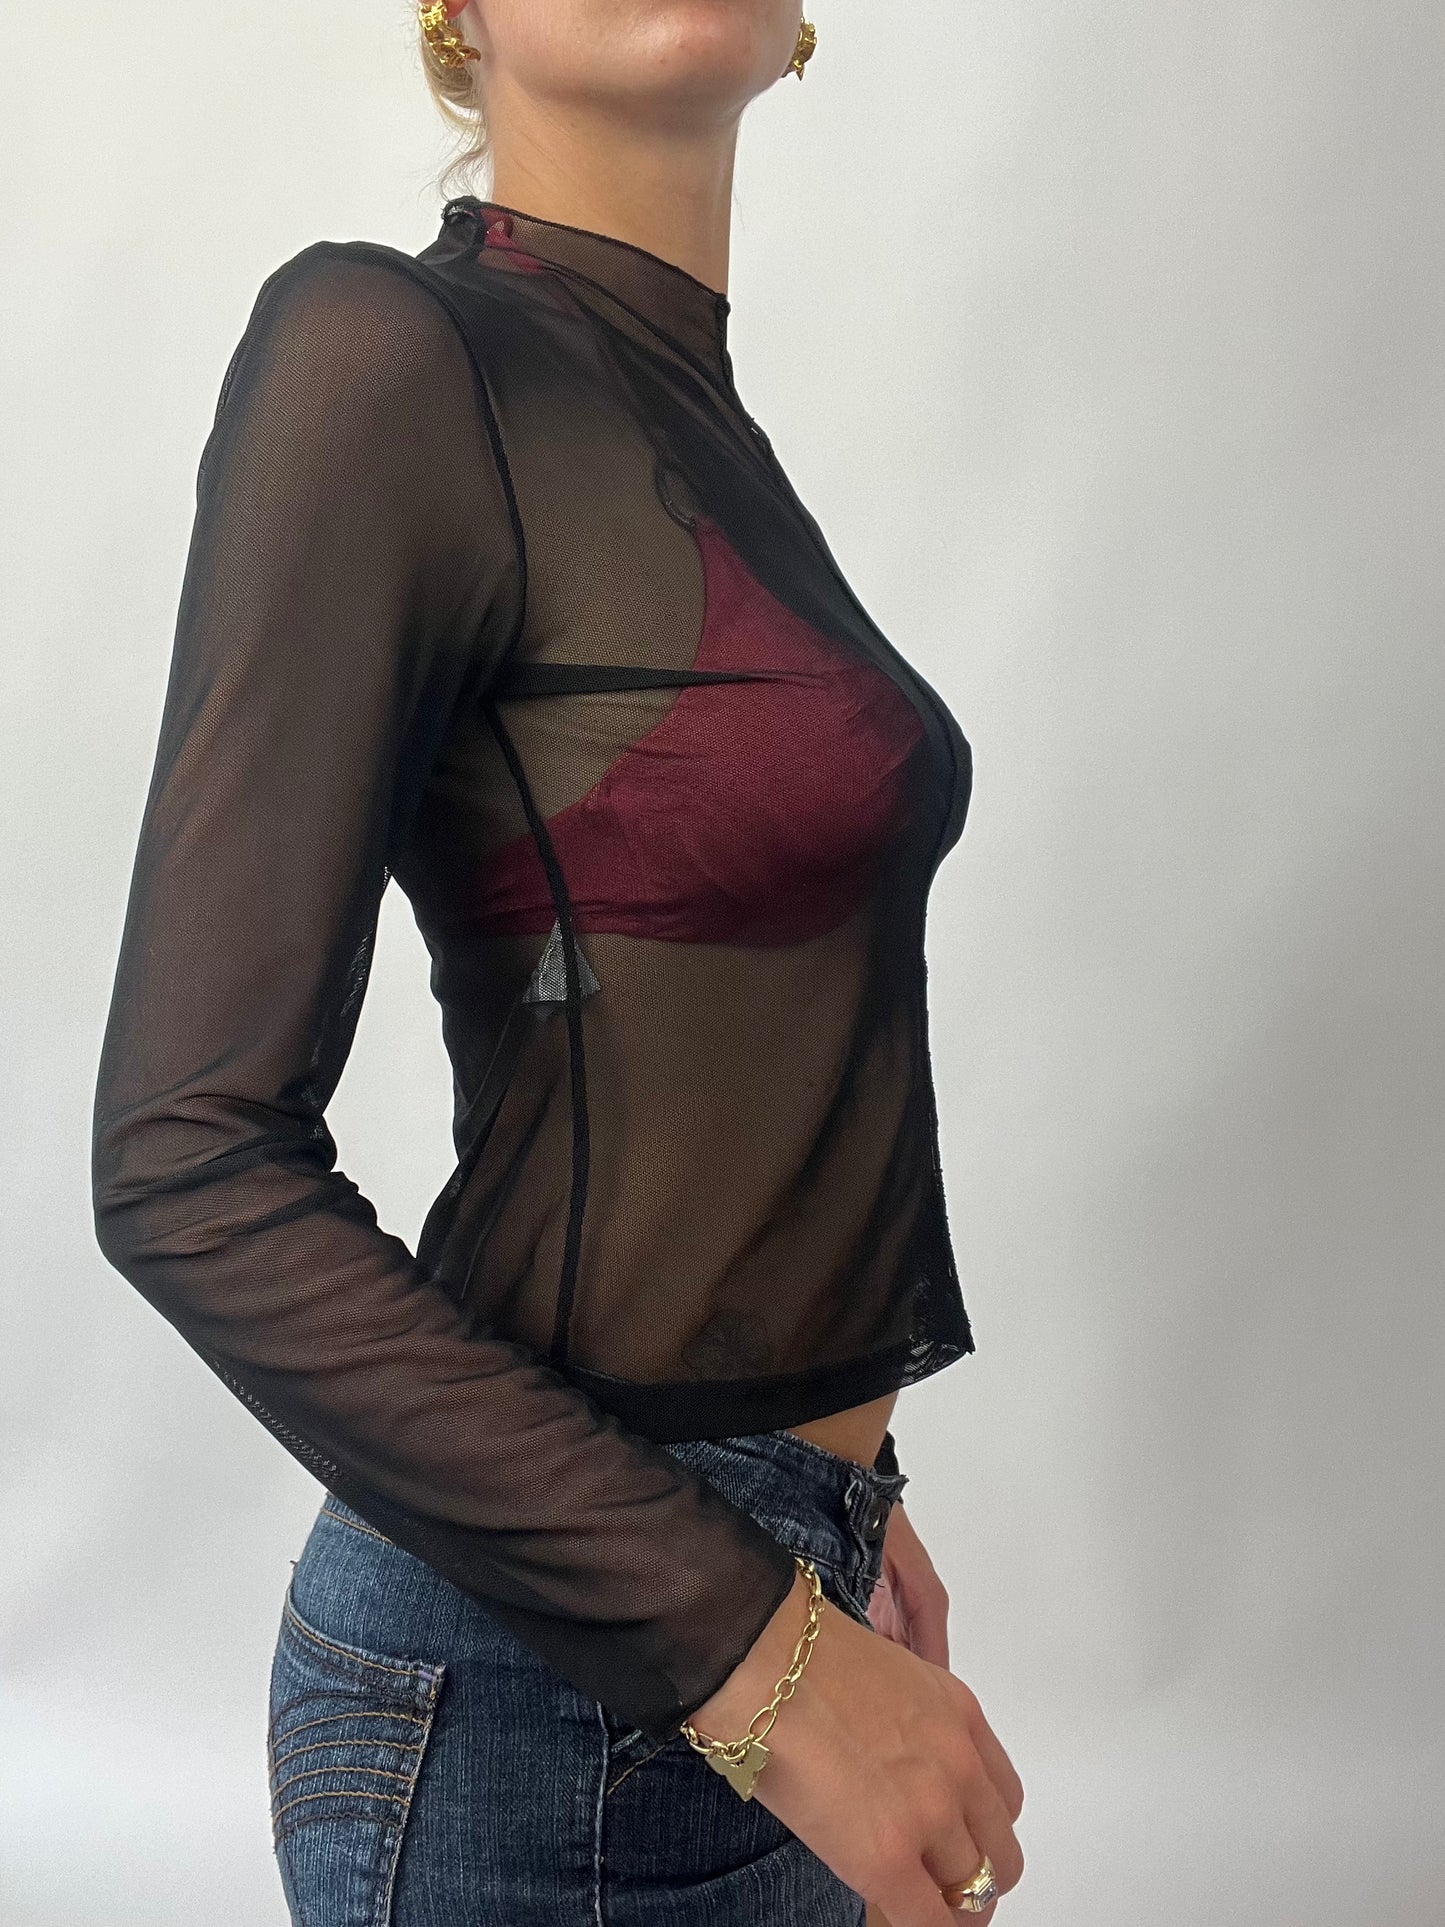 BRAT GIRL SUMMER DROP | small black long sleeve mesh top